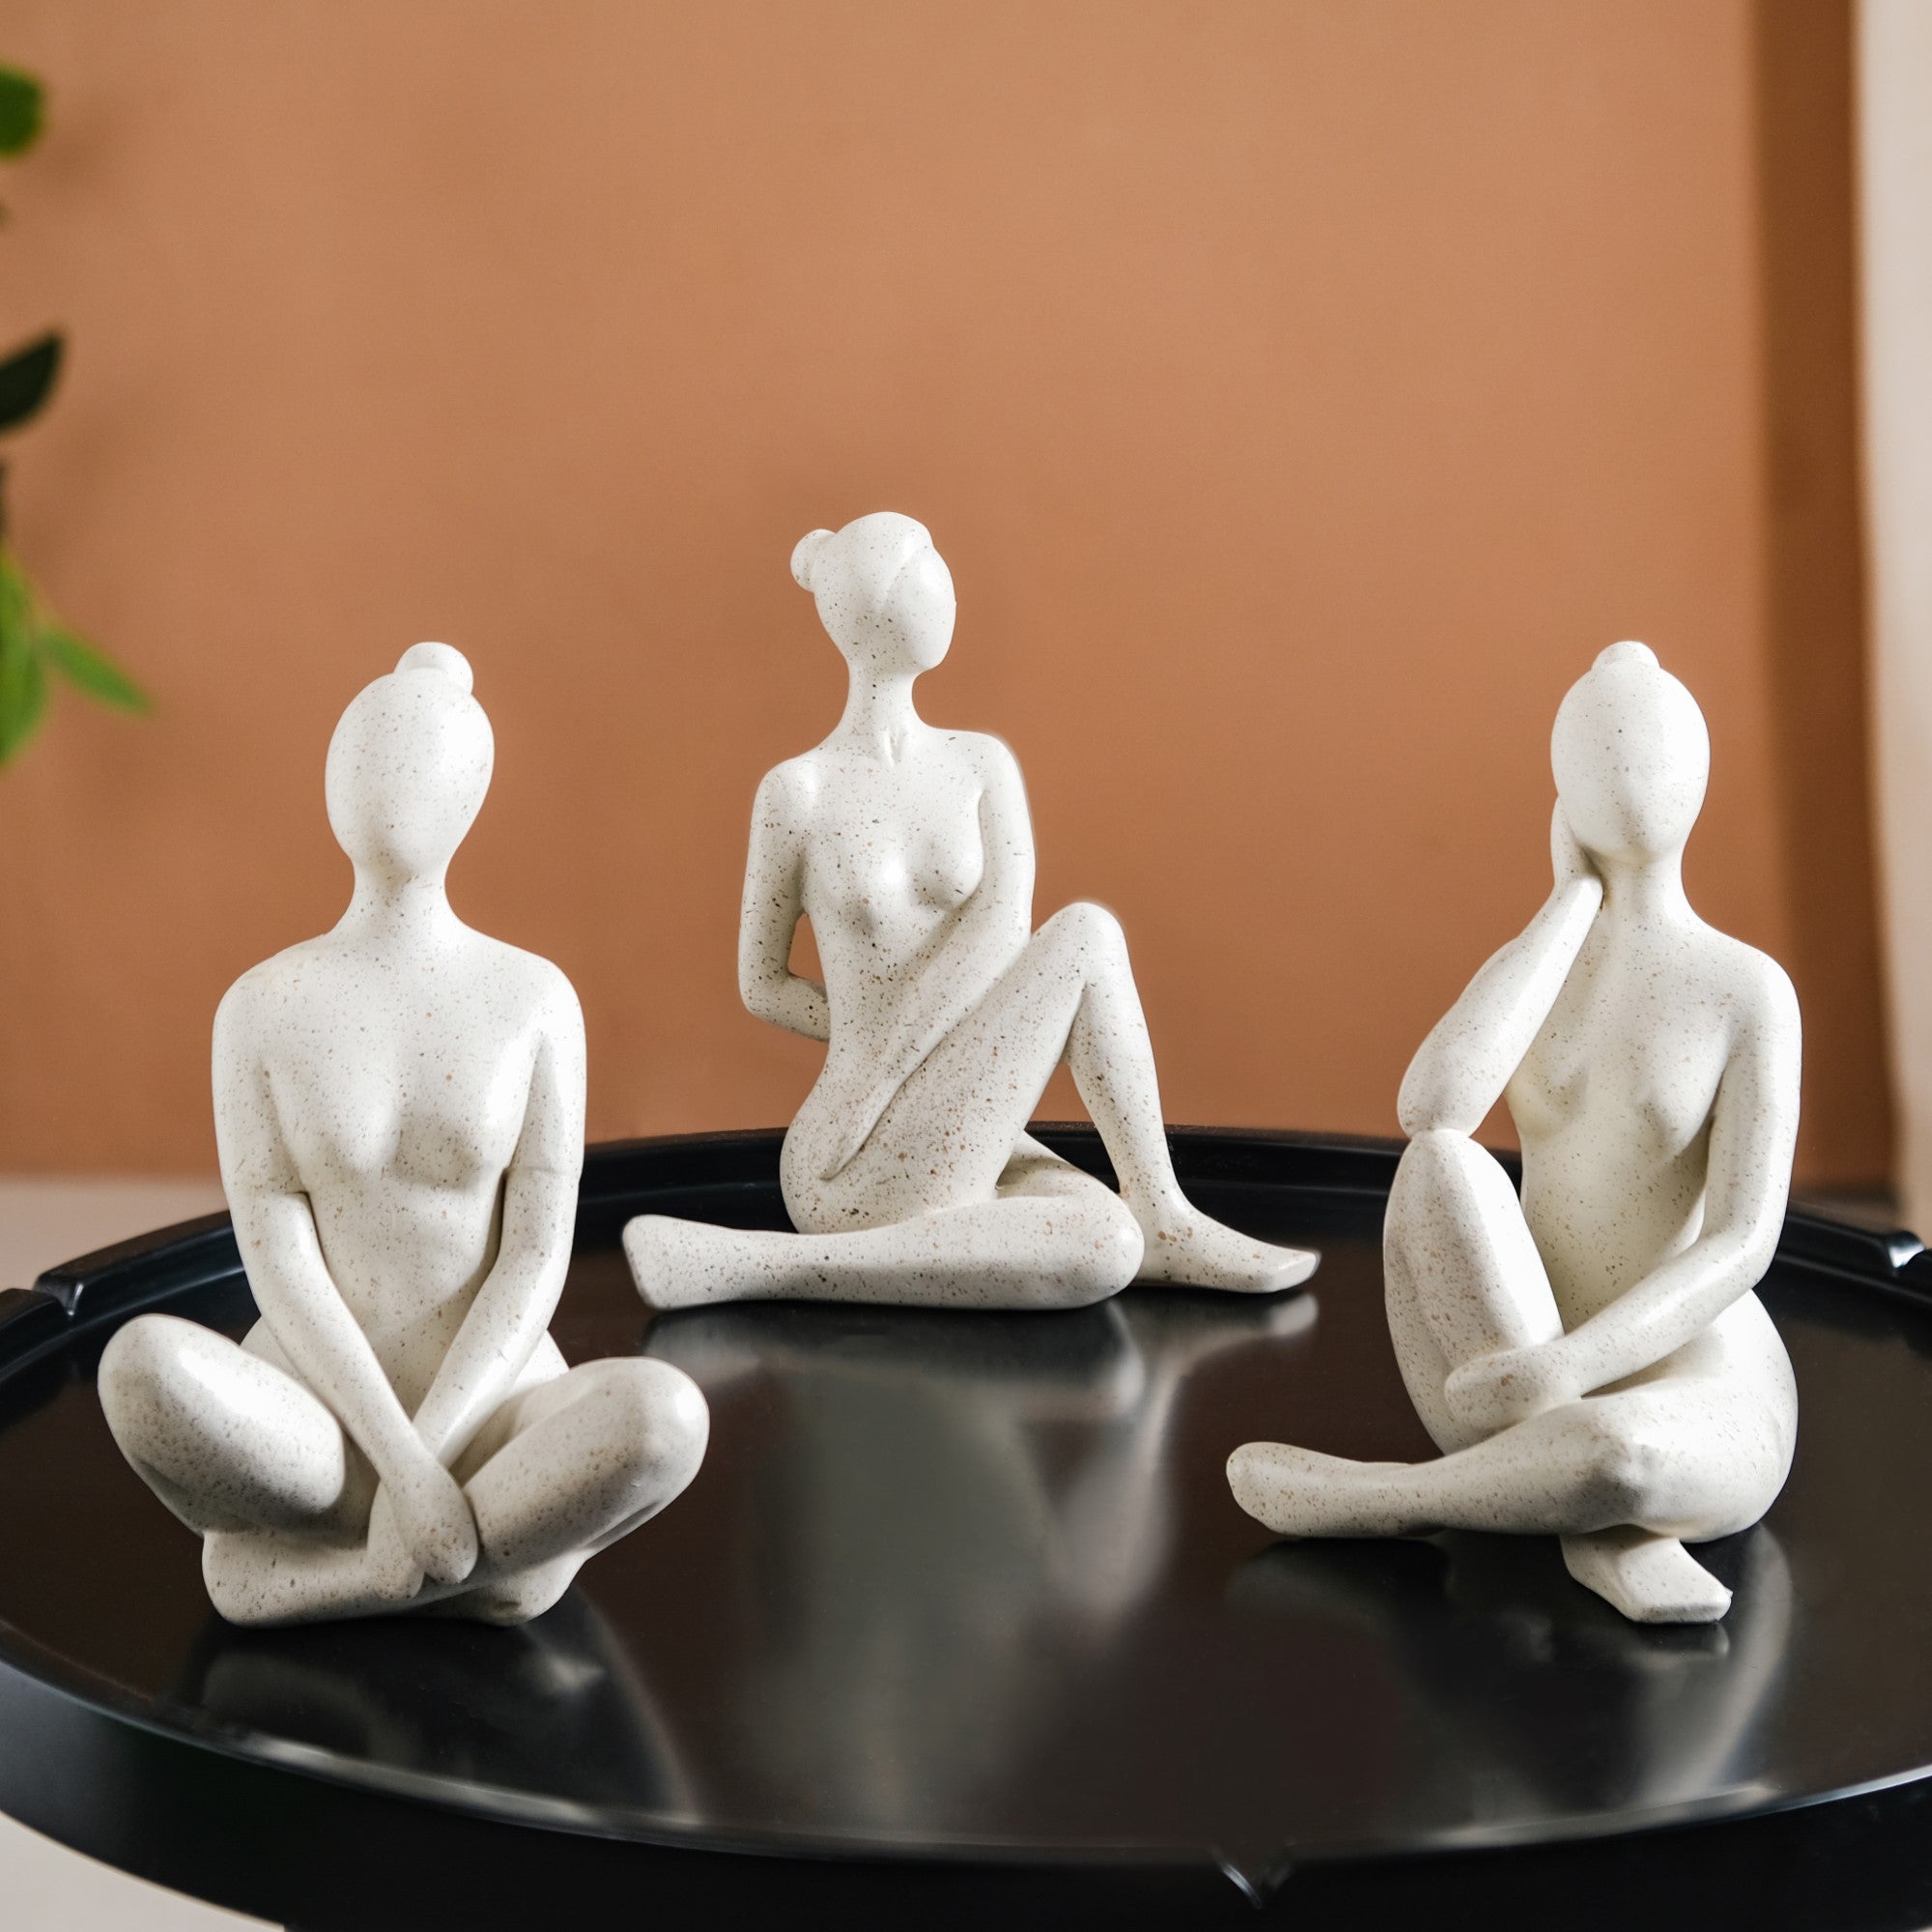 Yoga Body Wood Carving Sculpture Statues Home Ornament Desktop Yoga Girl  Decor | eBay